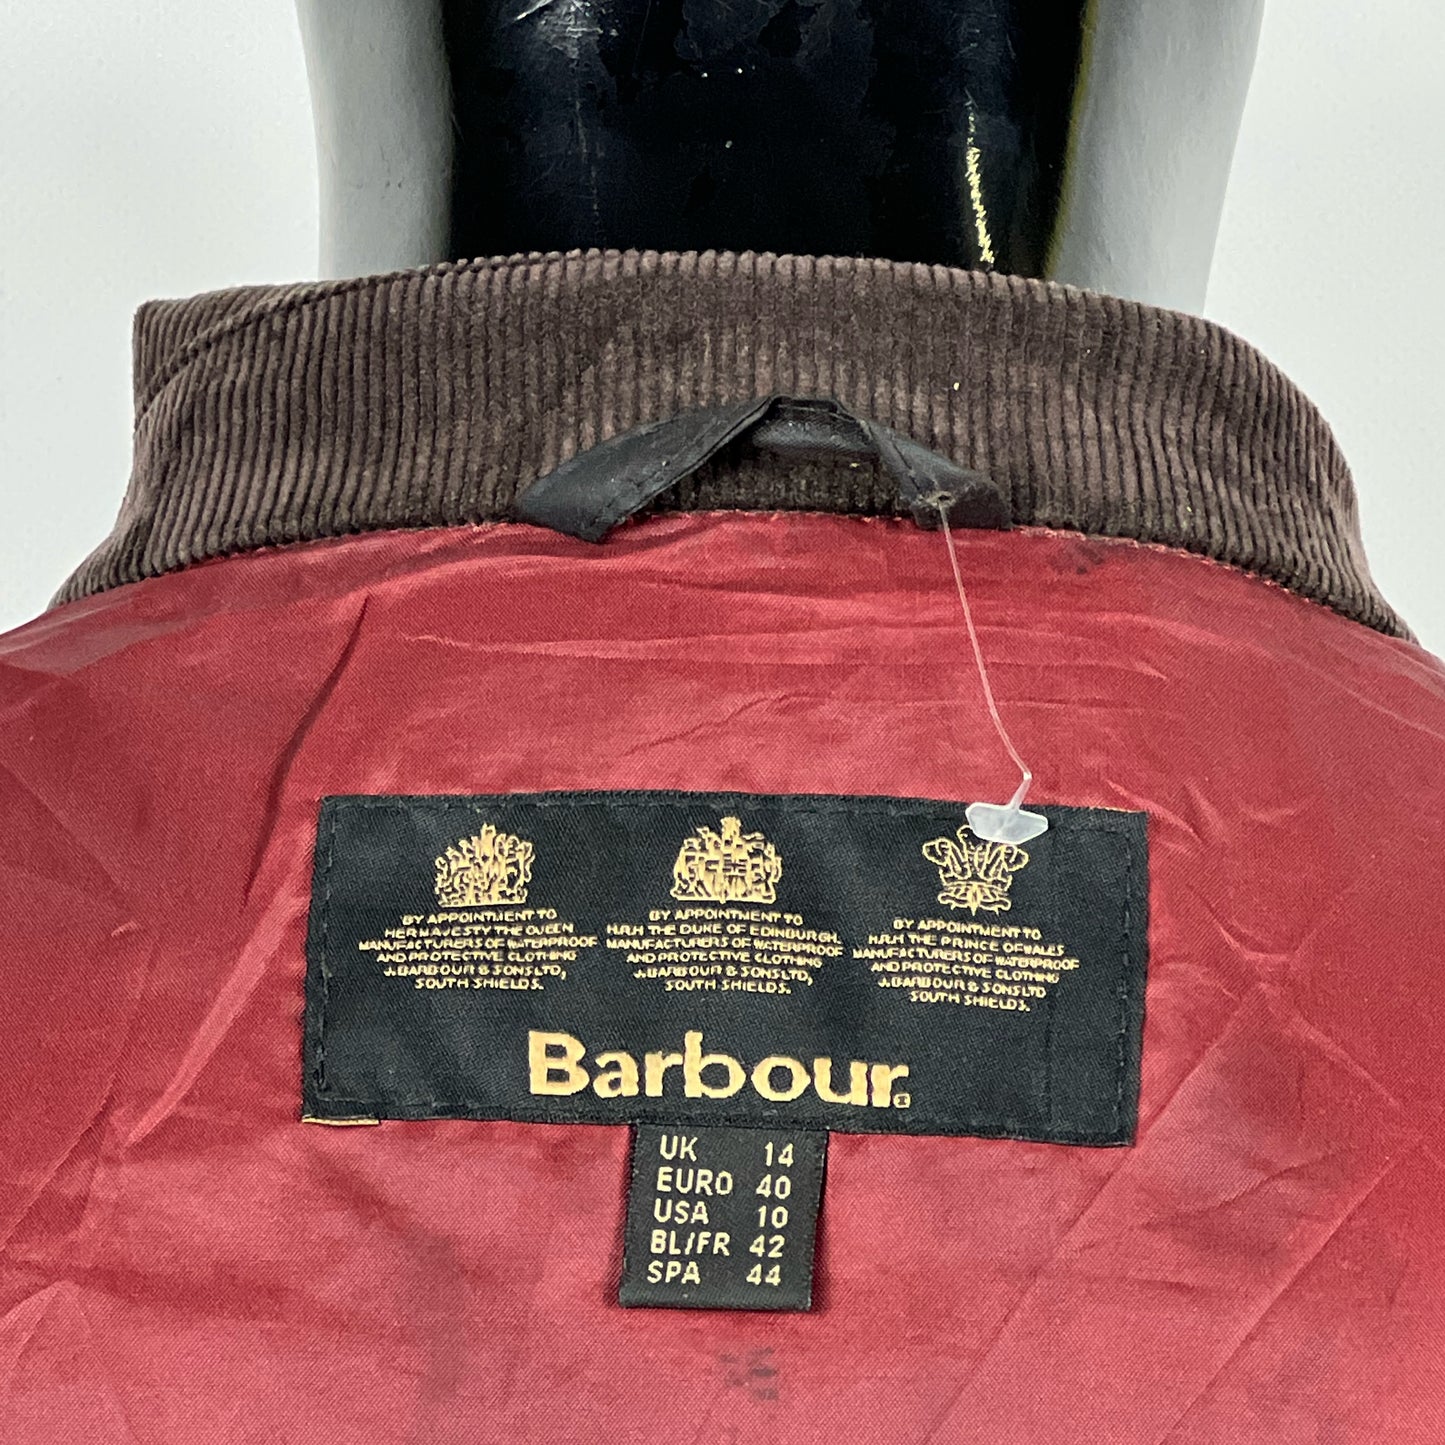 Giacca Barbour marrone leggera donna UK14 Tg. 42  Lady brown wax Jacket UK14